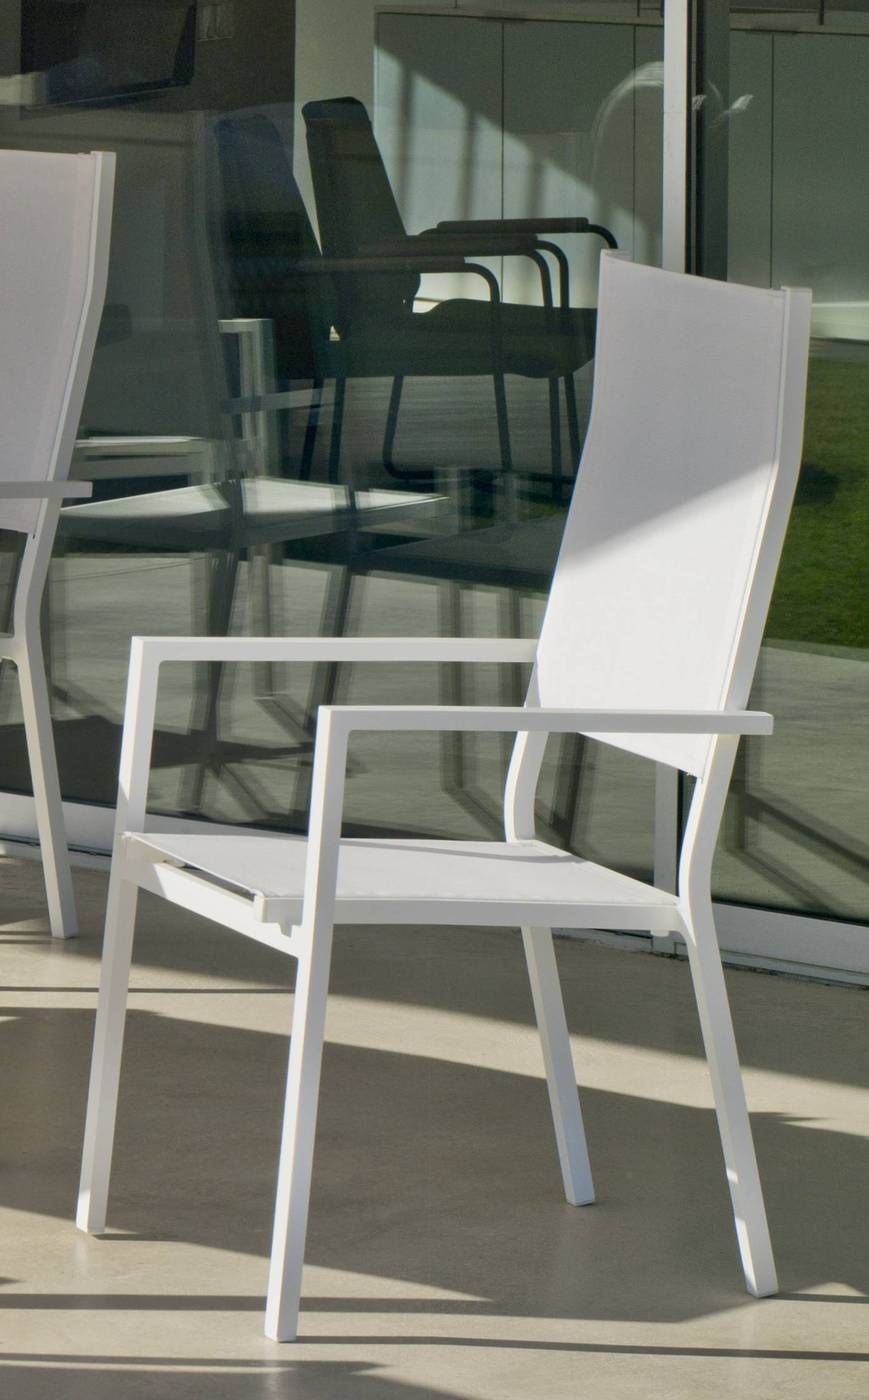 Set Córcega-160-4 Janeiro - Conjunto de aluminio para jardín: Mesa rectangular con tablero HPL de 160 cm + 4 sillones altos de textilen. Colores: blanco y antracita.<br/><br/><b>OFERTA VÁLIDA HASTA FIN DE EXISTENCIAS</b>.<br/><b>PLAZO ENTREGA: 2 a 3 semanas</b>.